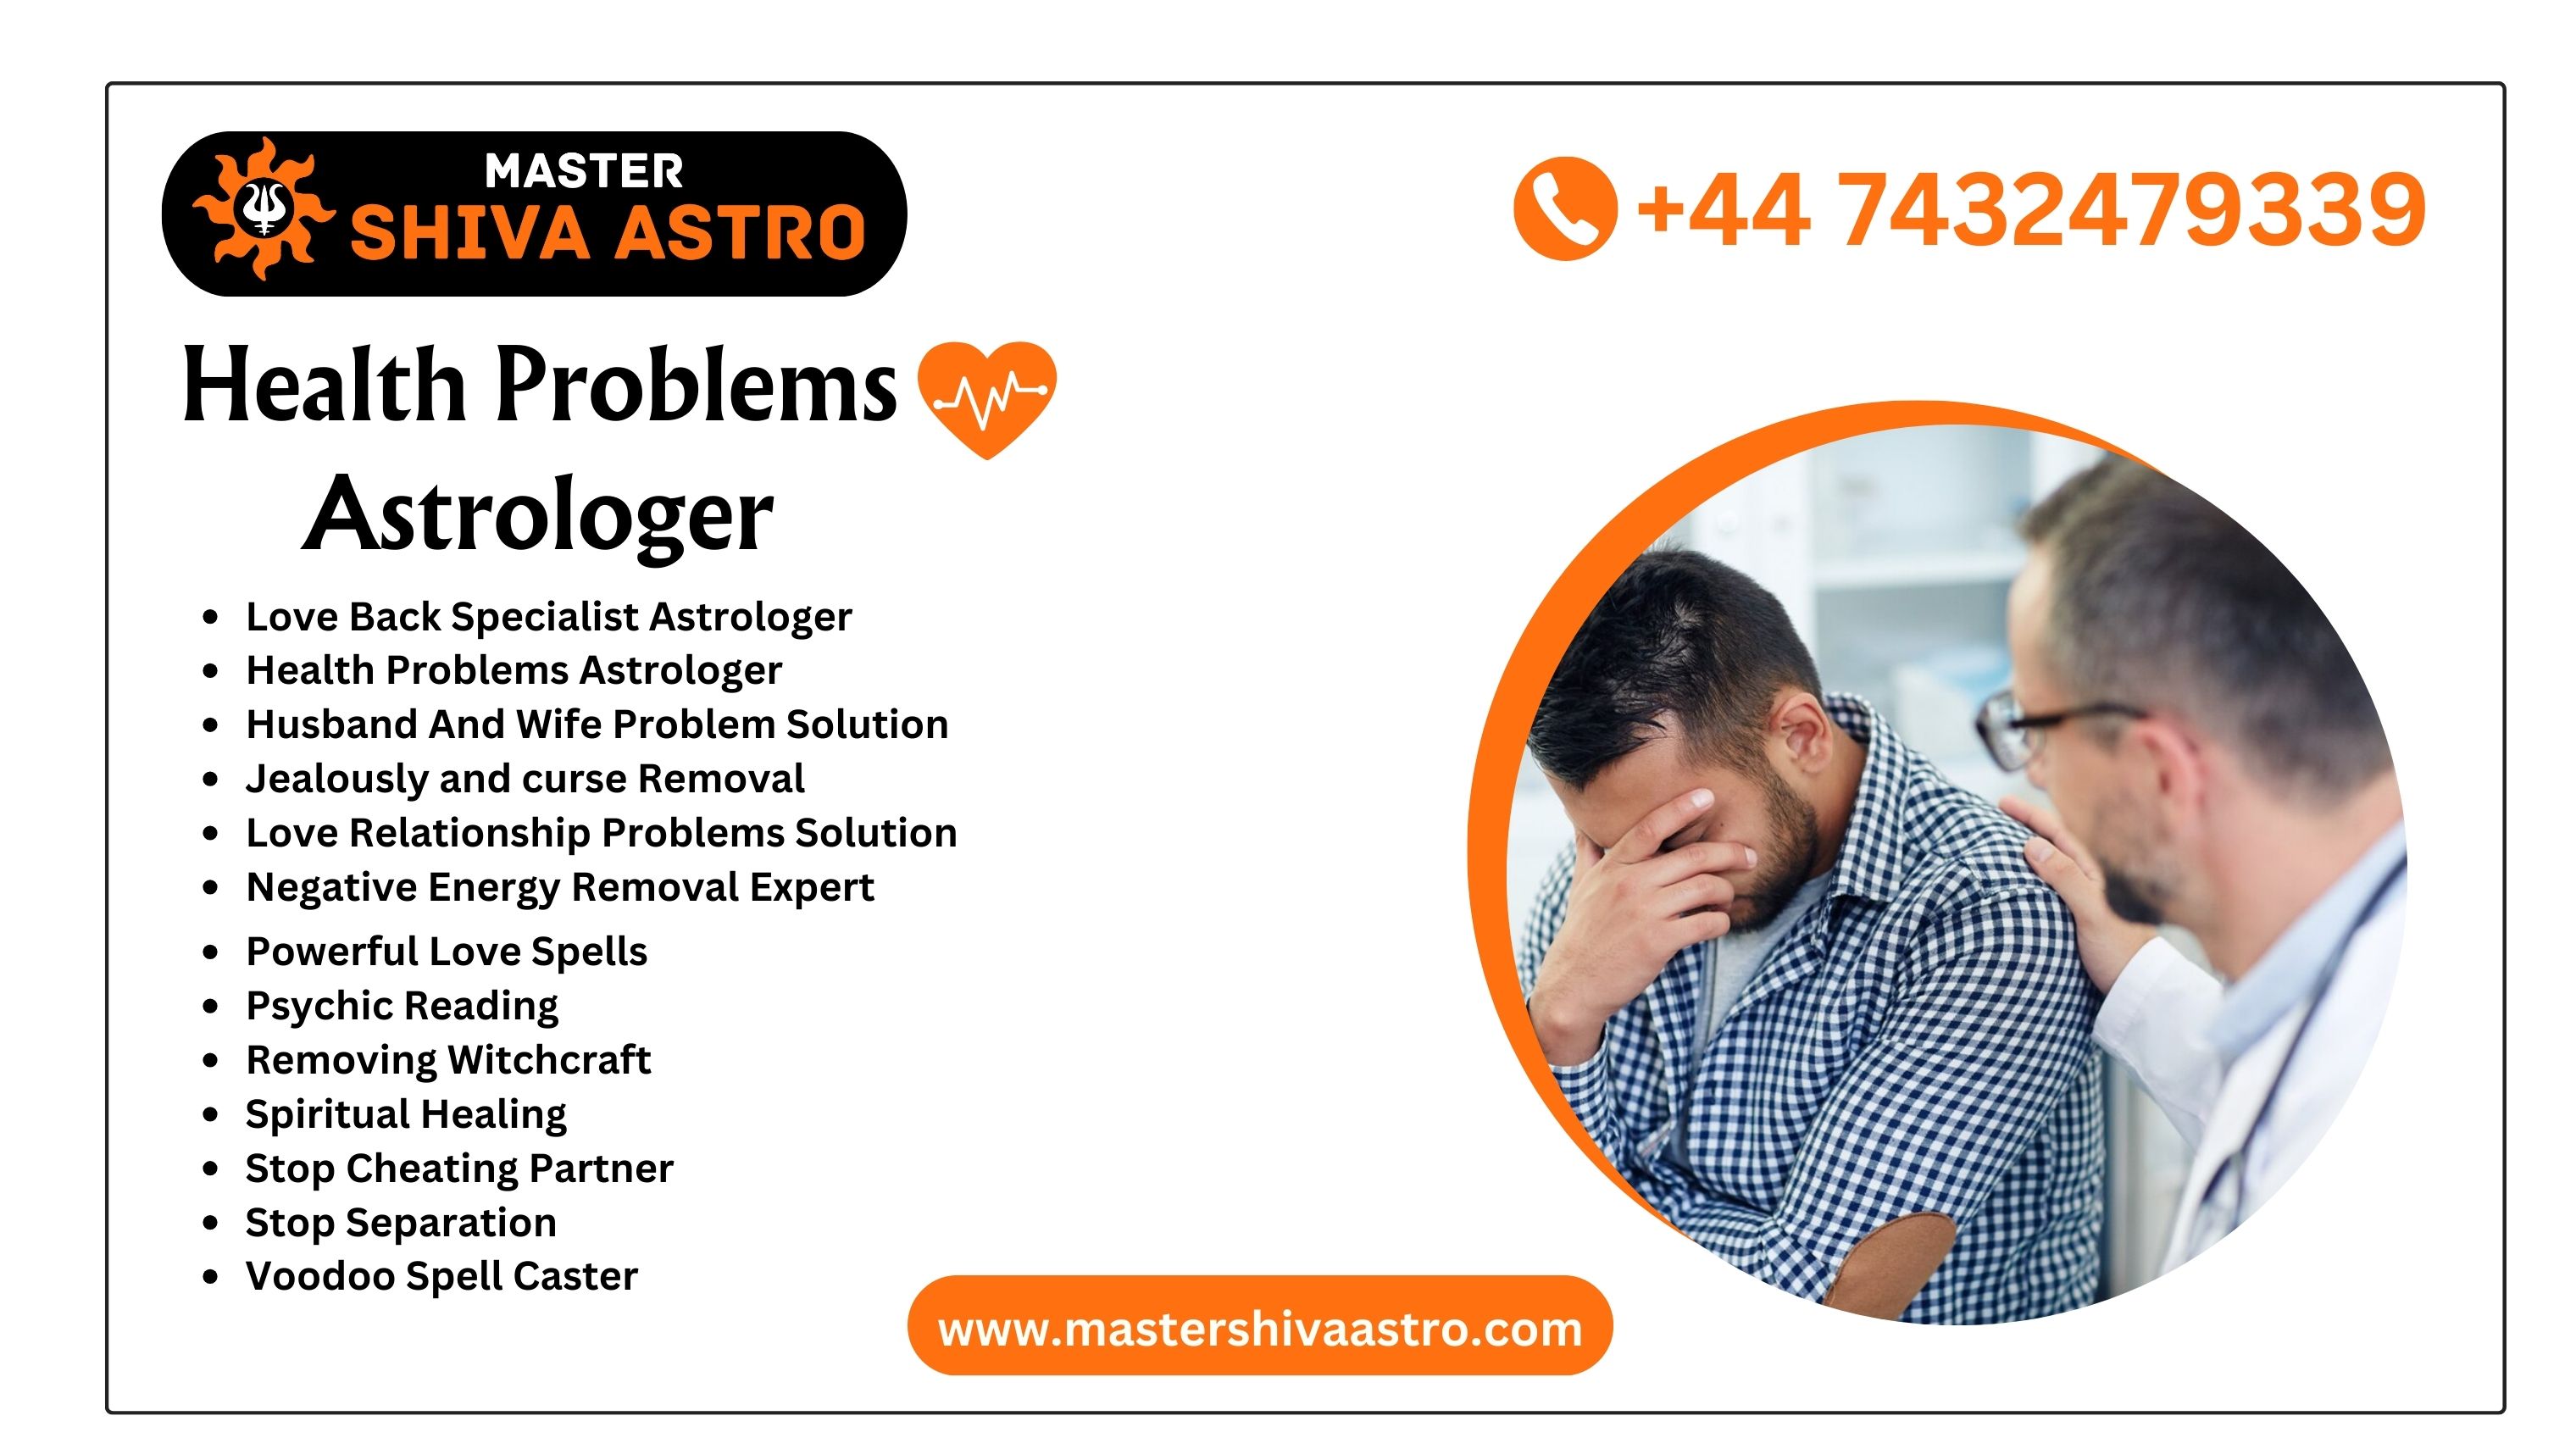 Health Problems Specialist Astrologer - Master Shiva